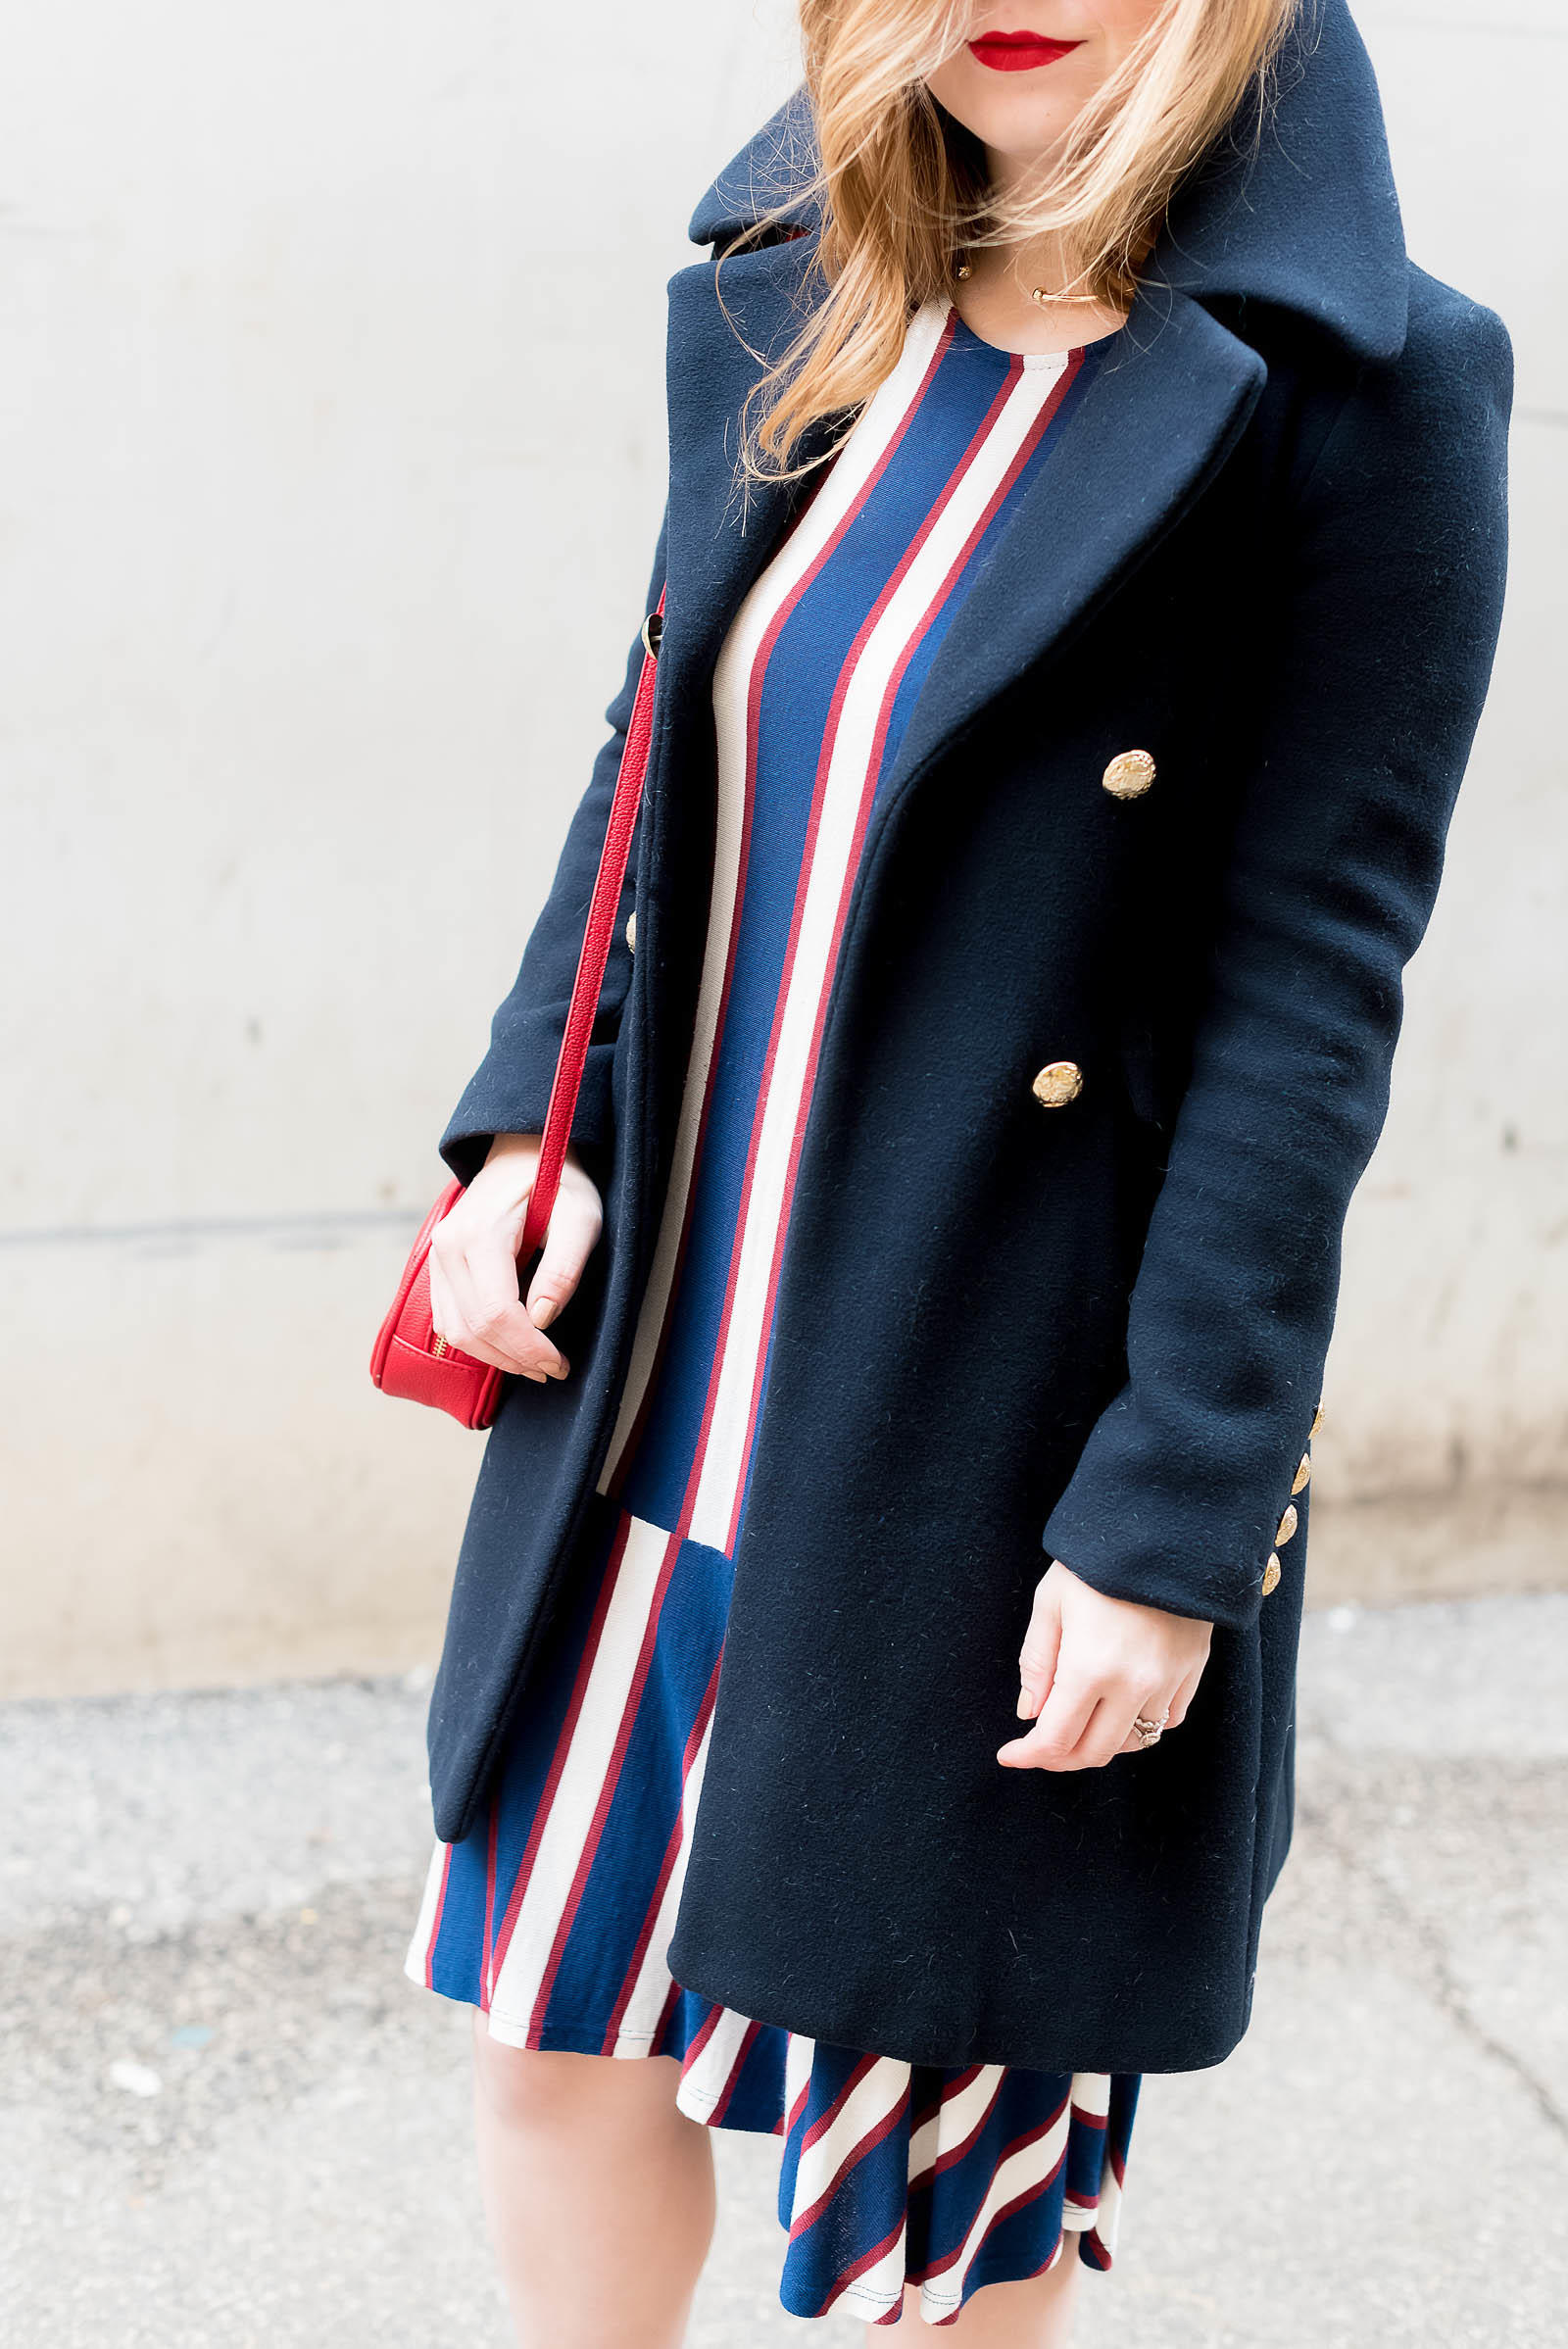 Zara Military Coat Stripe Red Pump Outfit Nautical